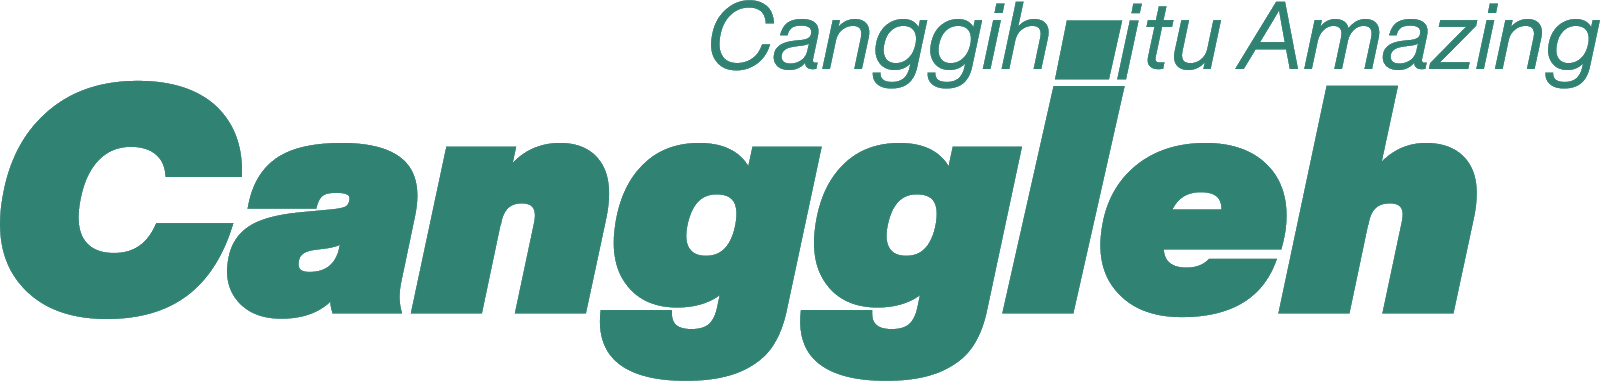 Canggieh